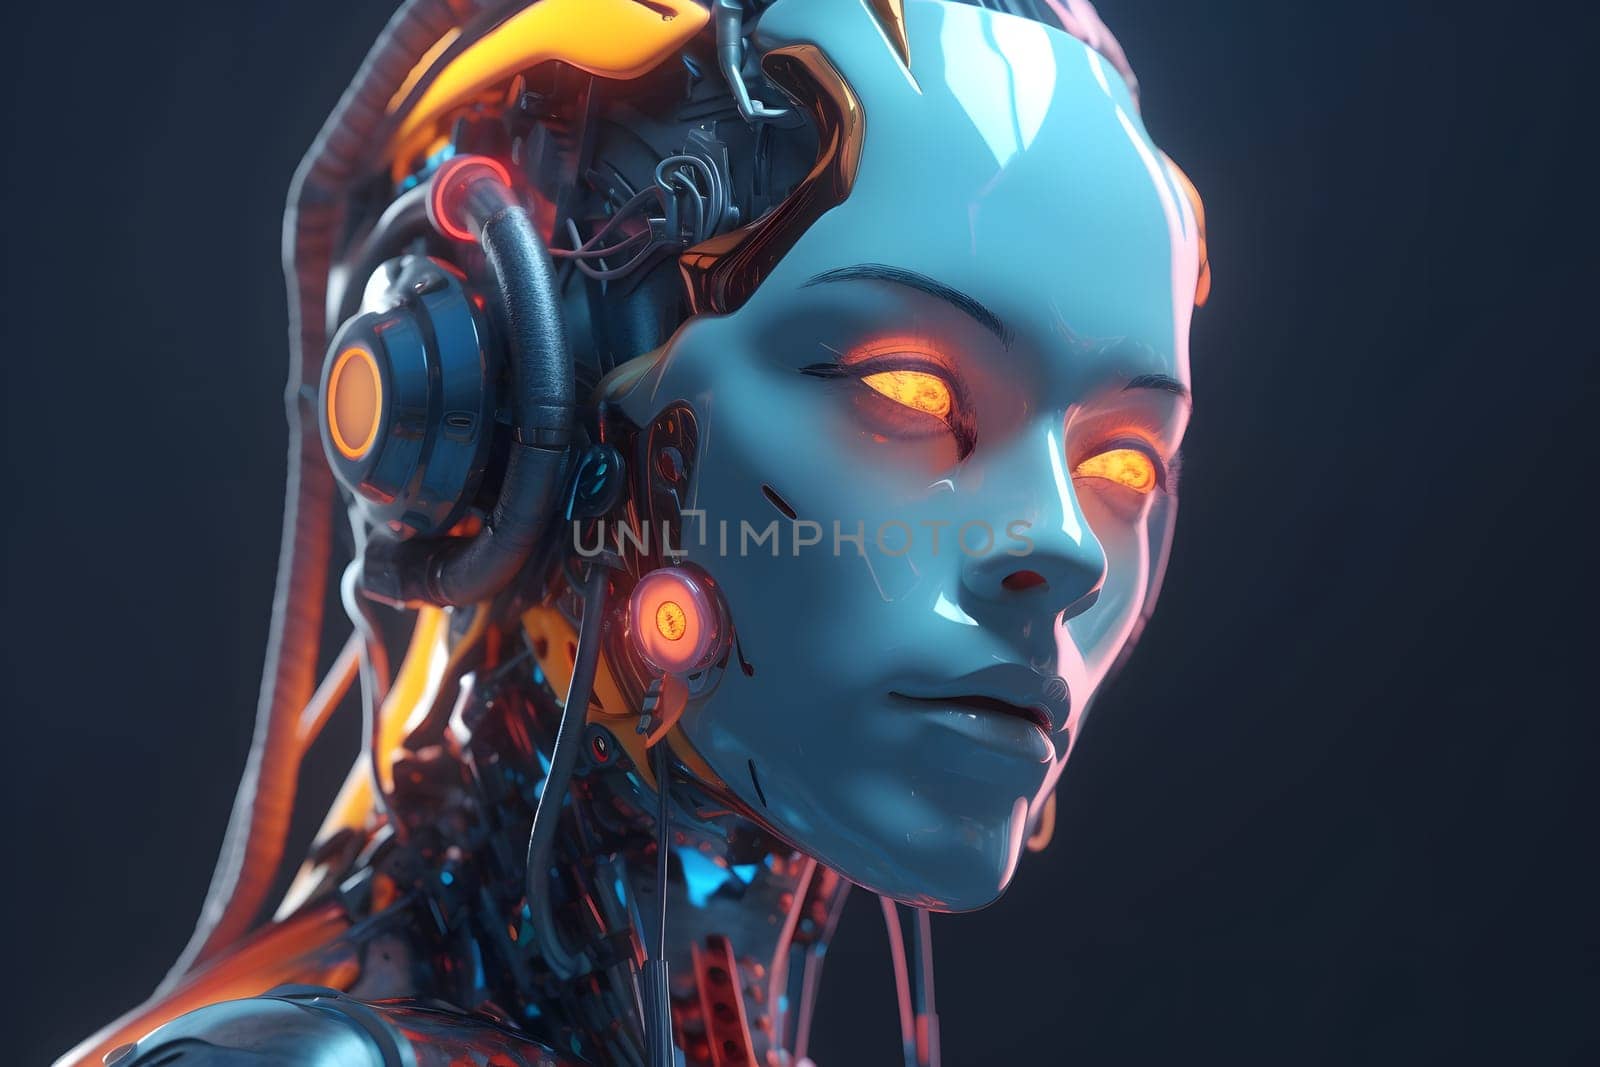 anthropomorphic humanoid female robot head portrait on dark background in blue tones, neural network generated art by z1b